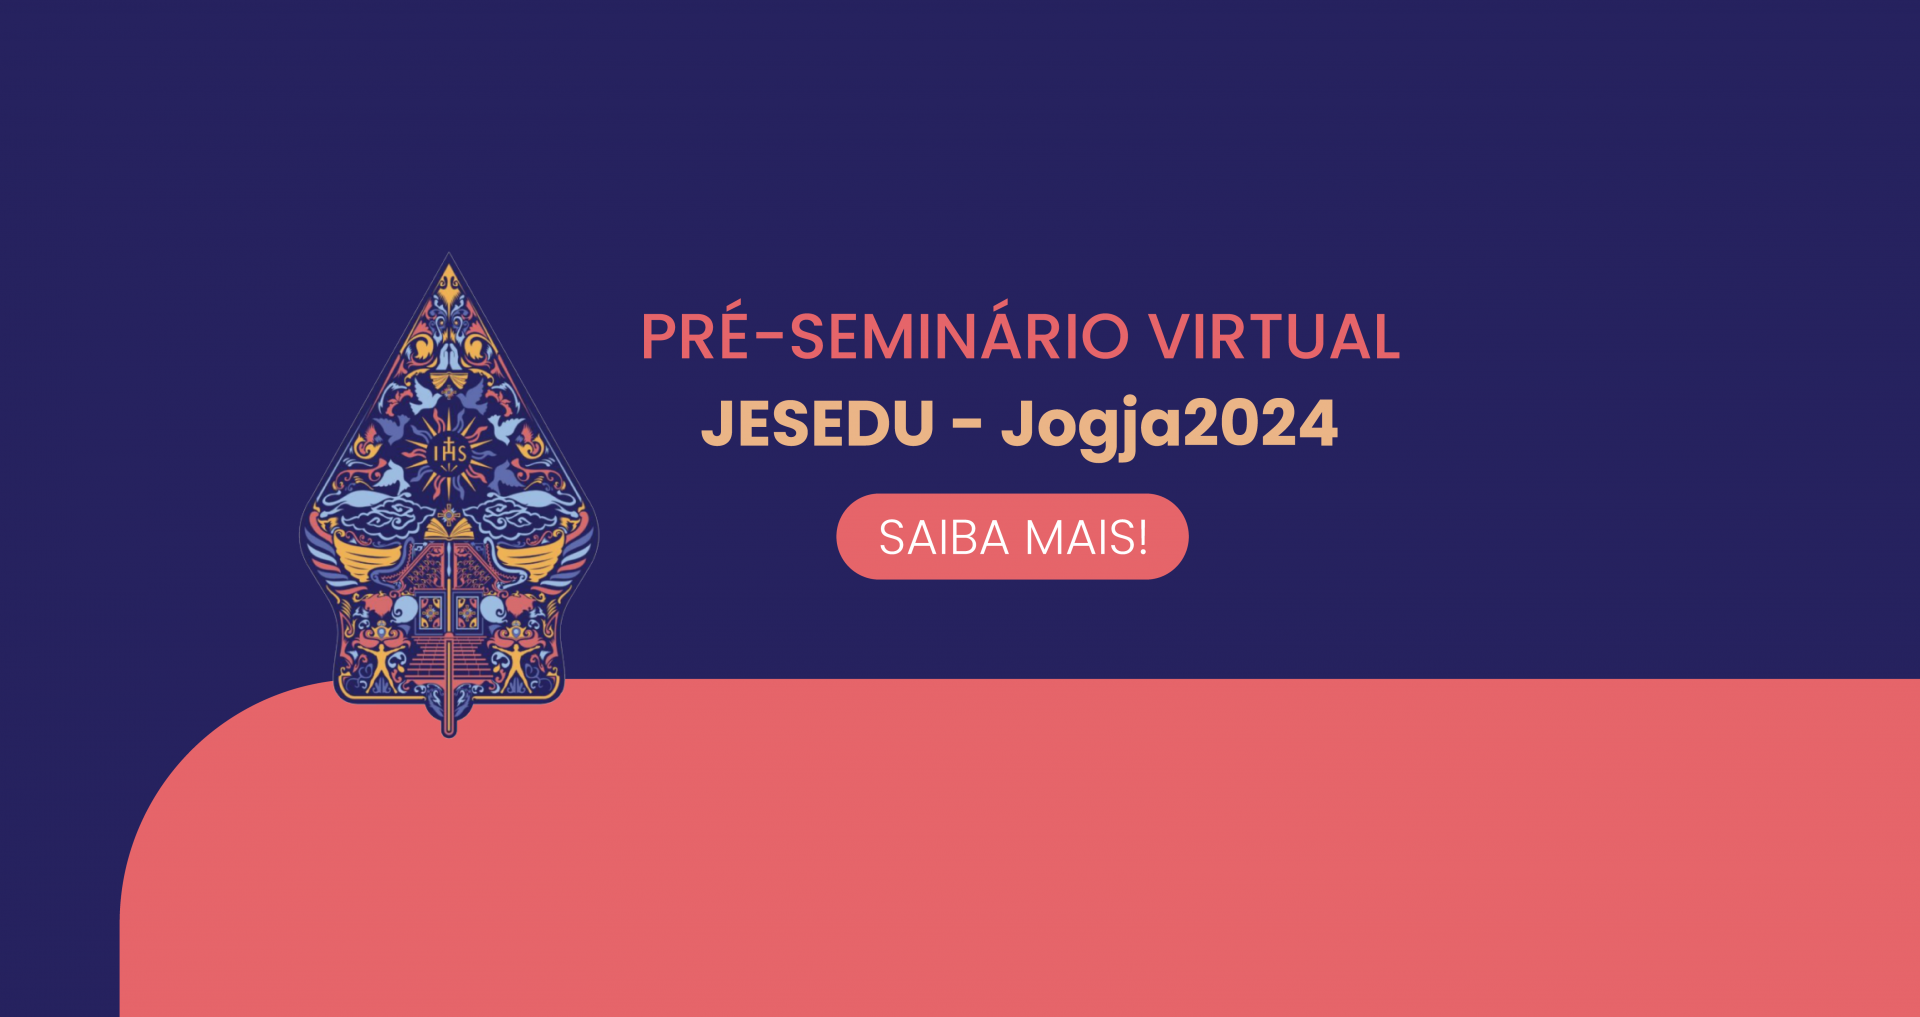 Pré-seminário virtual JESEDU-Jogja2024 